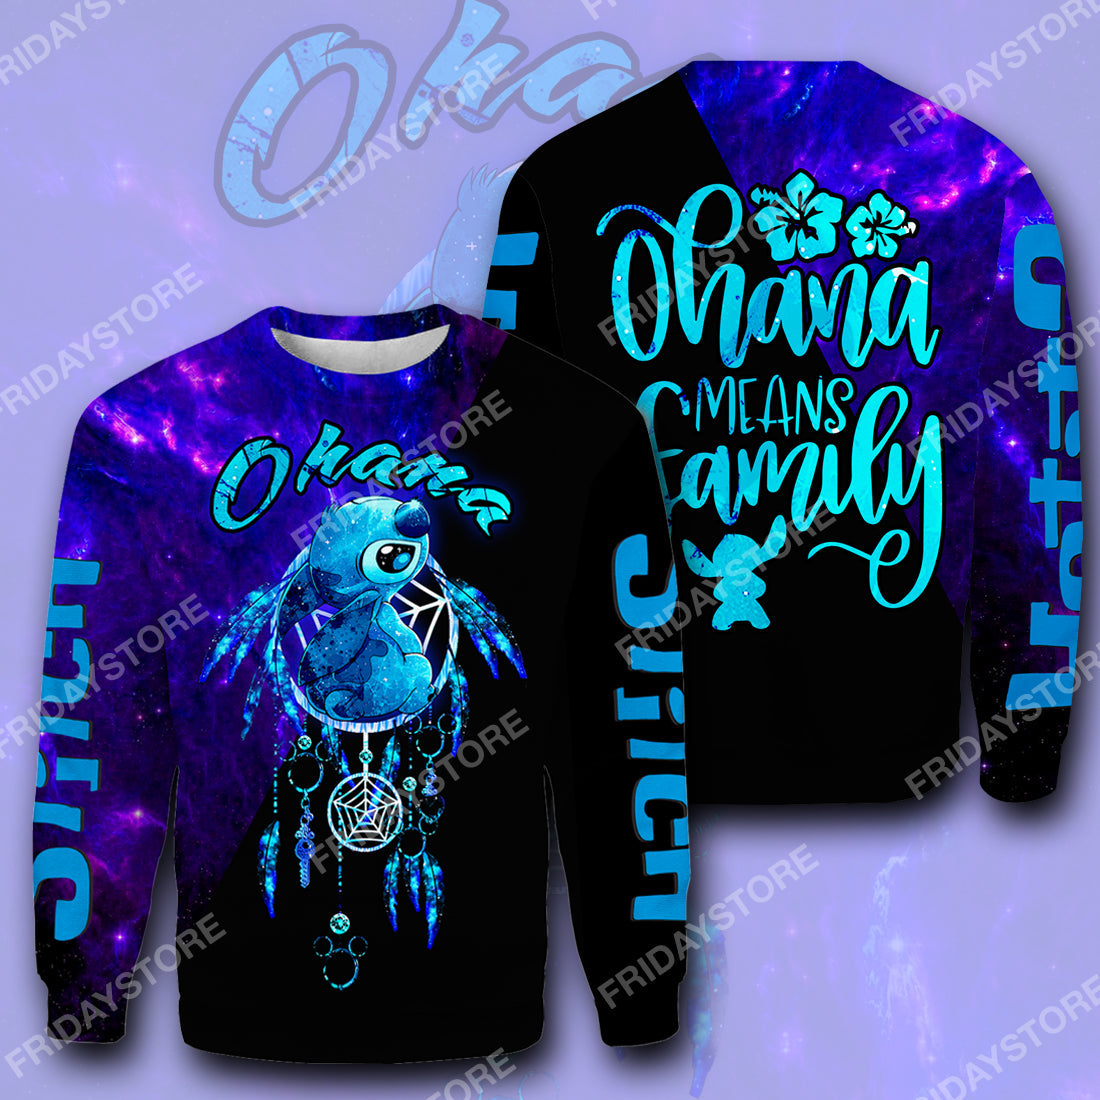 Unifinz LAS T-shirt Ohana Means Family Dreamcatcher T-shirt Amazing DN Stitch Hoodie Sweater Tank 2024